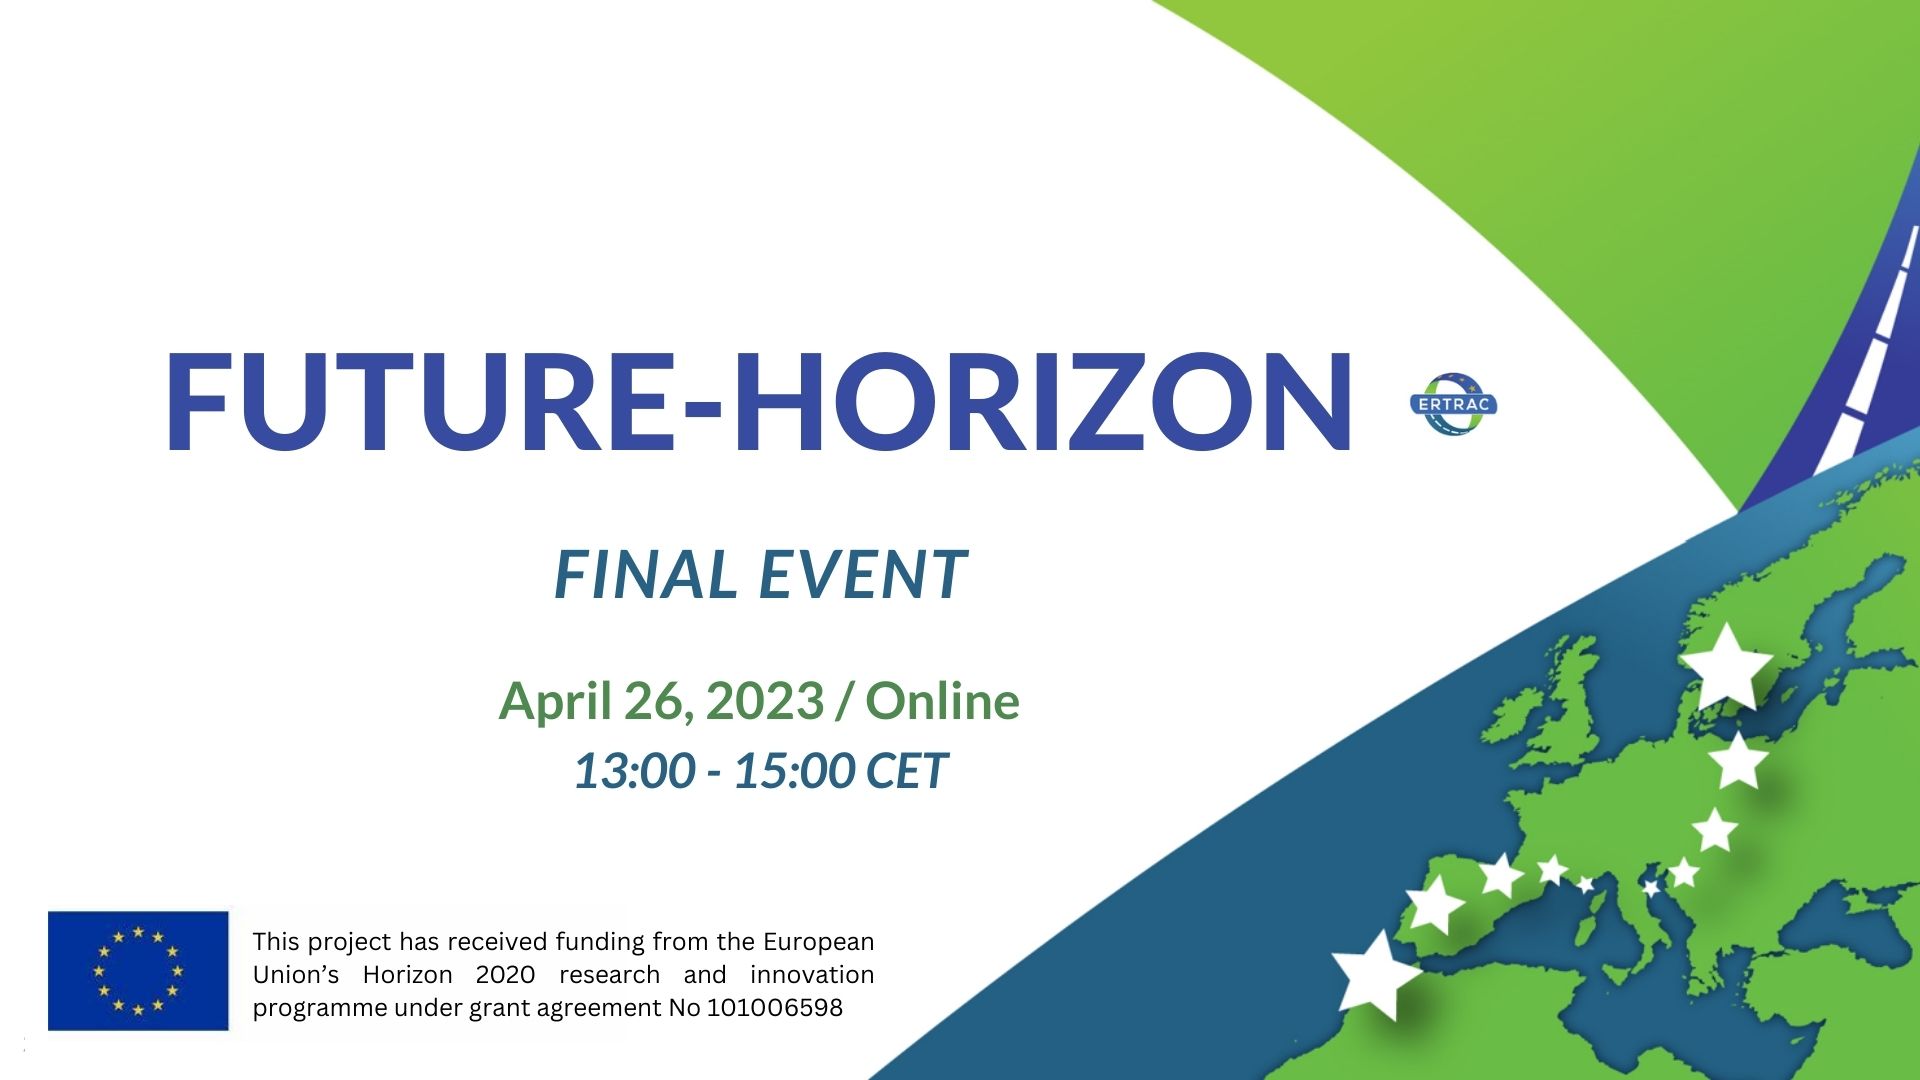 FUTURE-HORIZON final event: 26/04